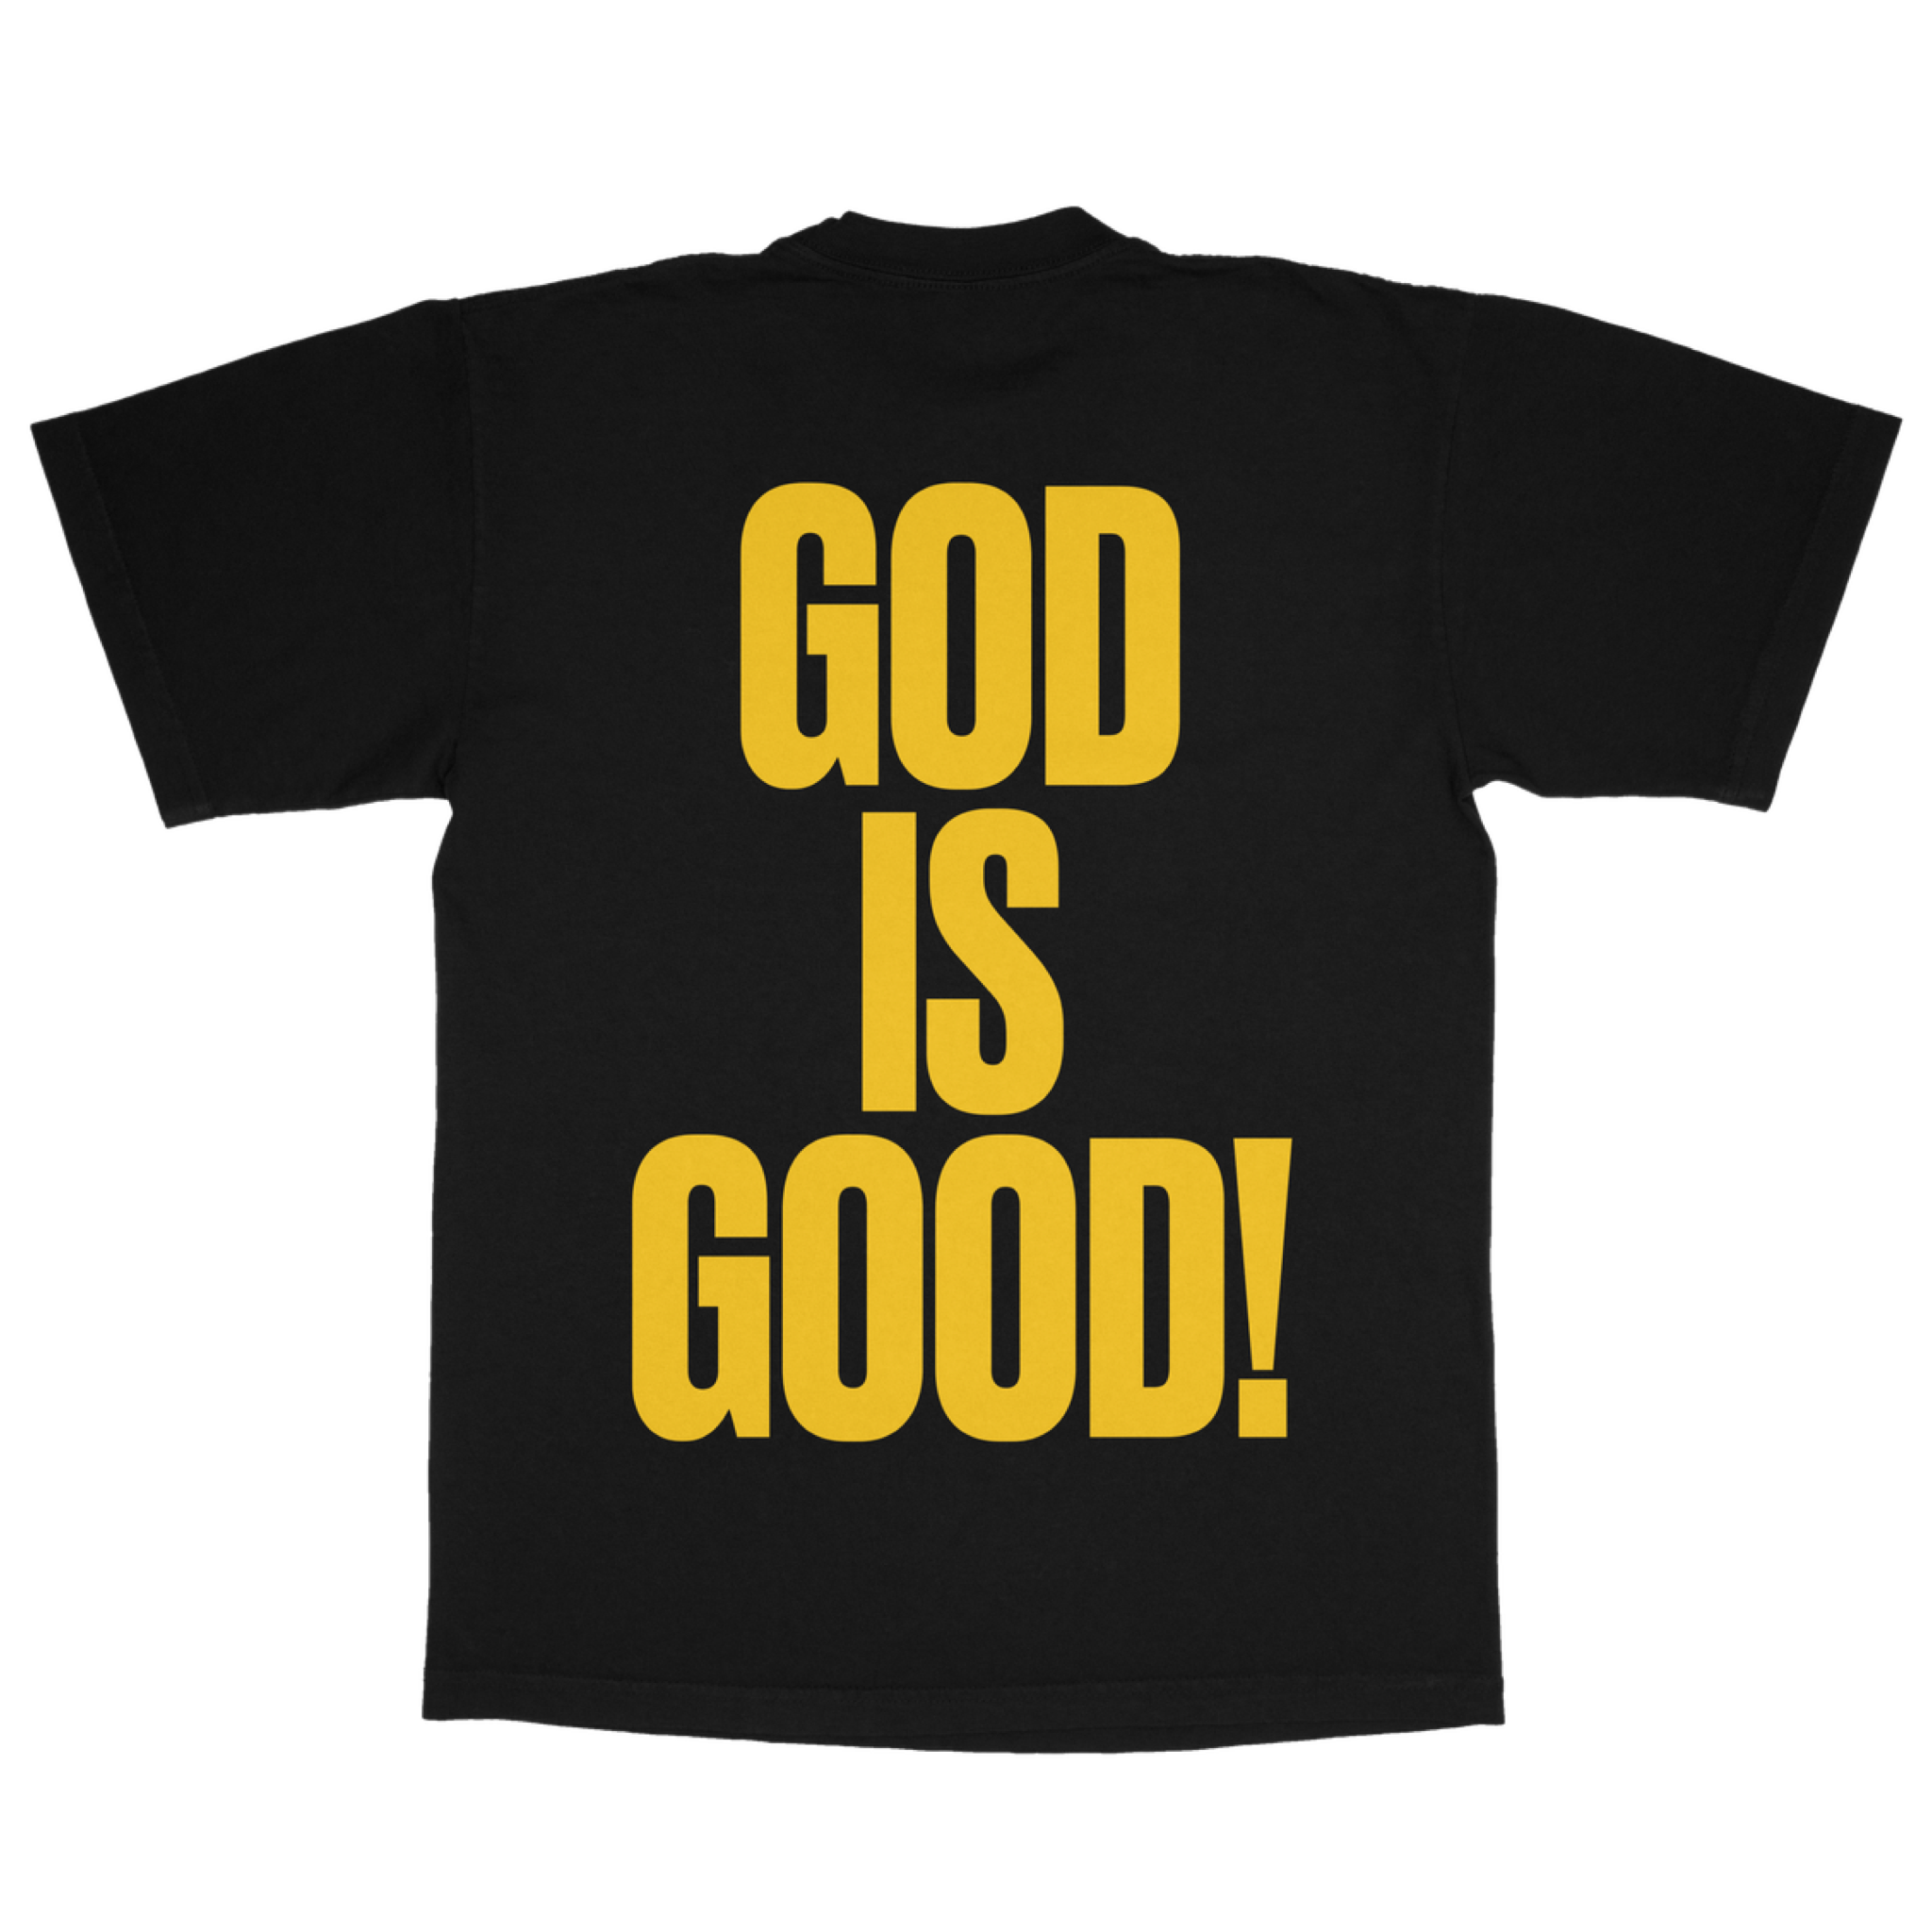 GOD IS GOOD! - UNISEX SHIRT